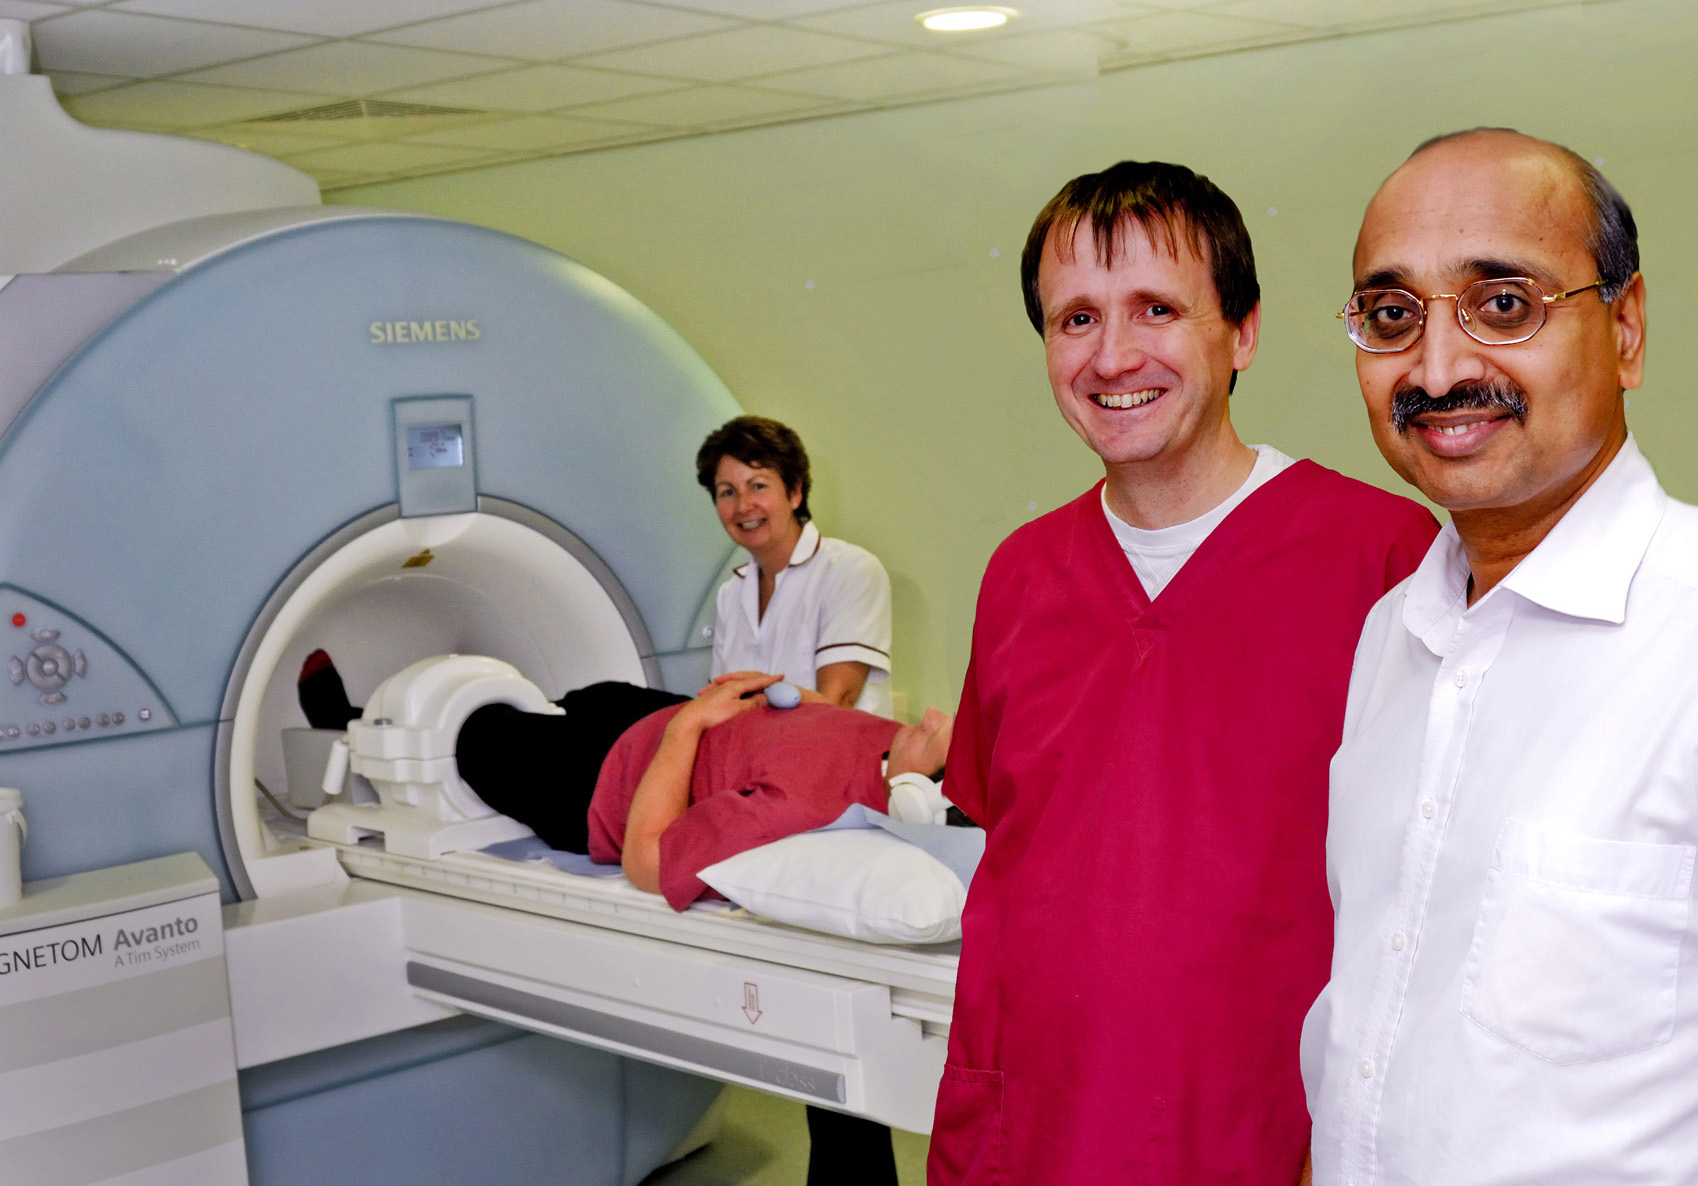 Royal Oldham Hospital Improves its MRI service with Siemens?s MAGNETOM ...